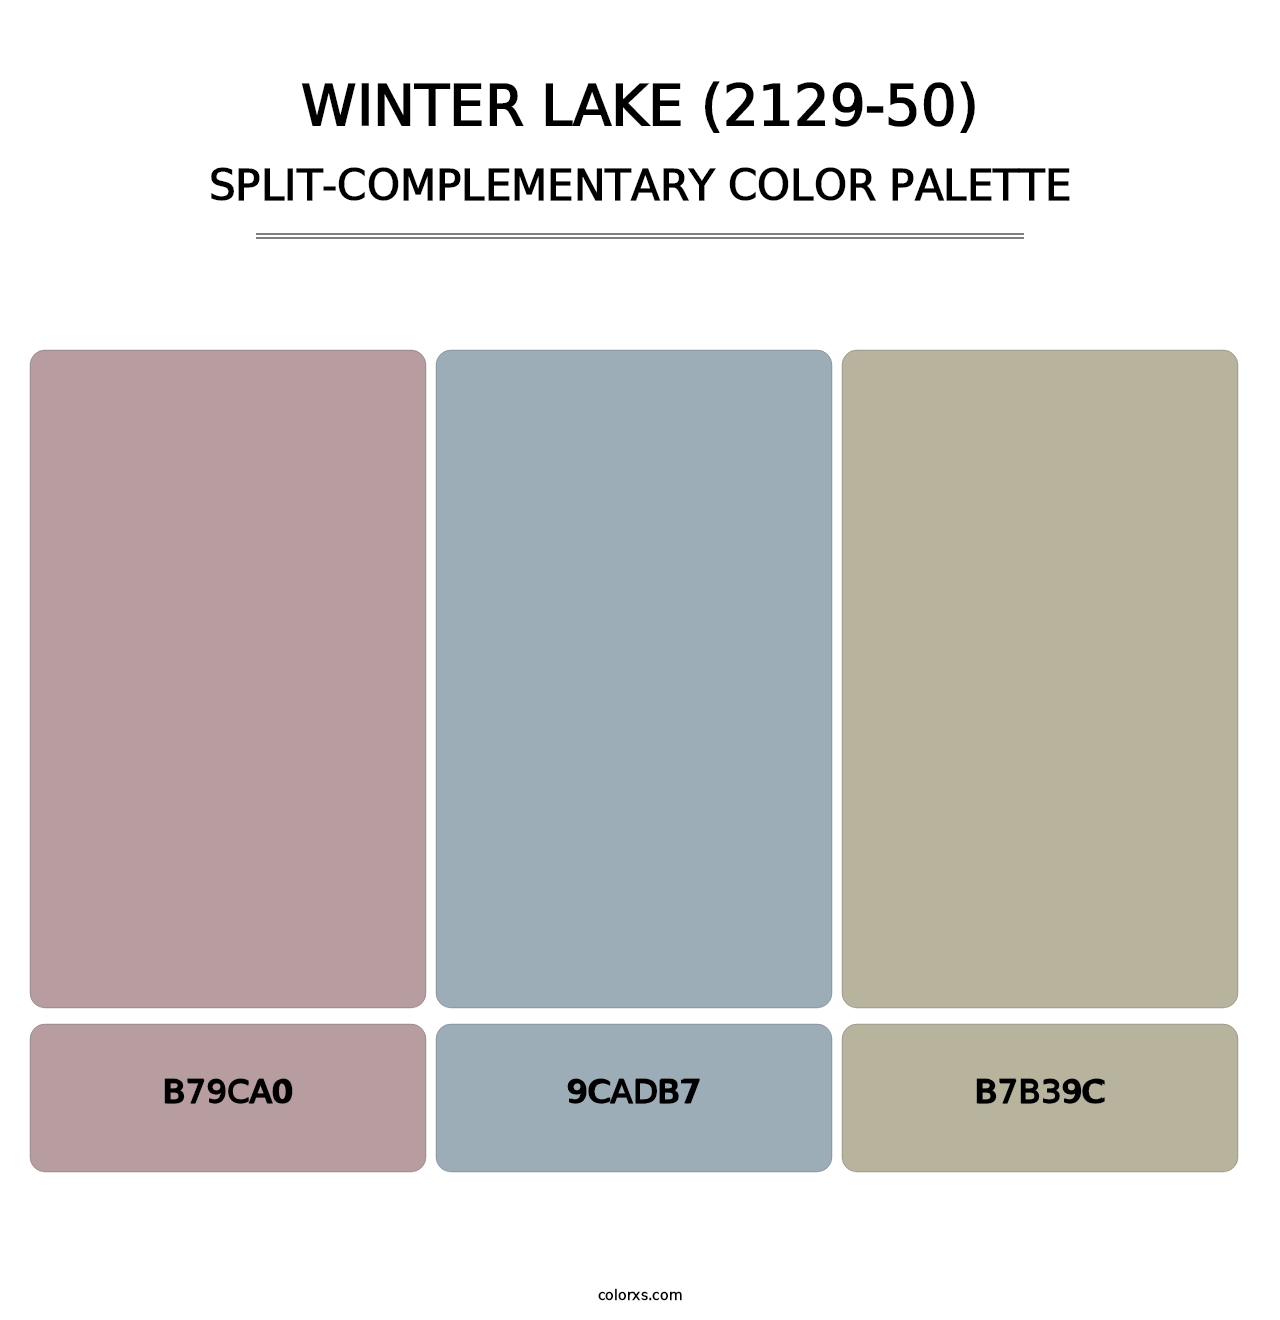 Winter Lake (2129-50) - Split-Complementary Color Palette